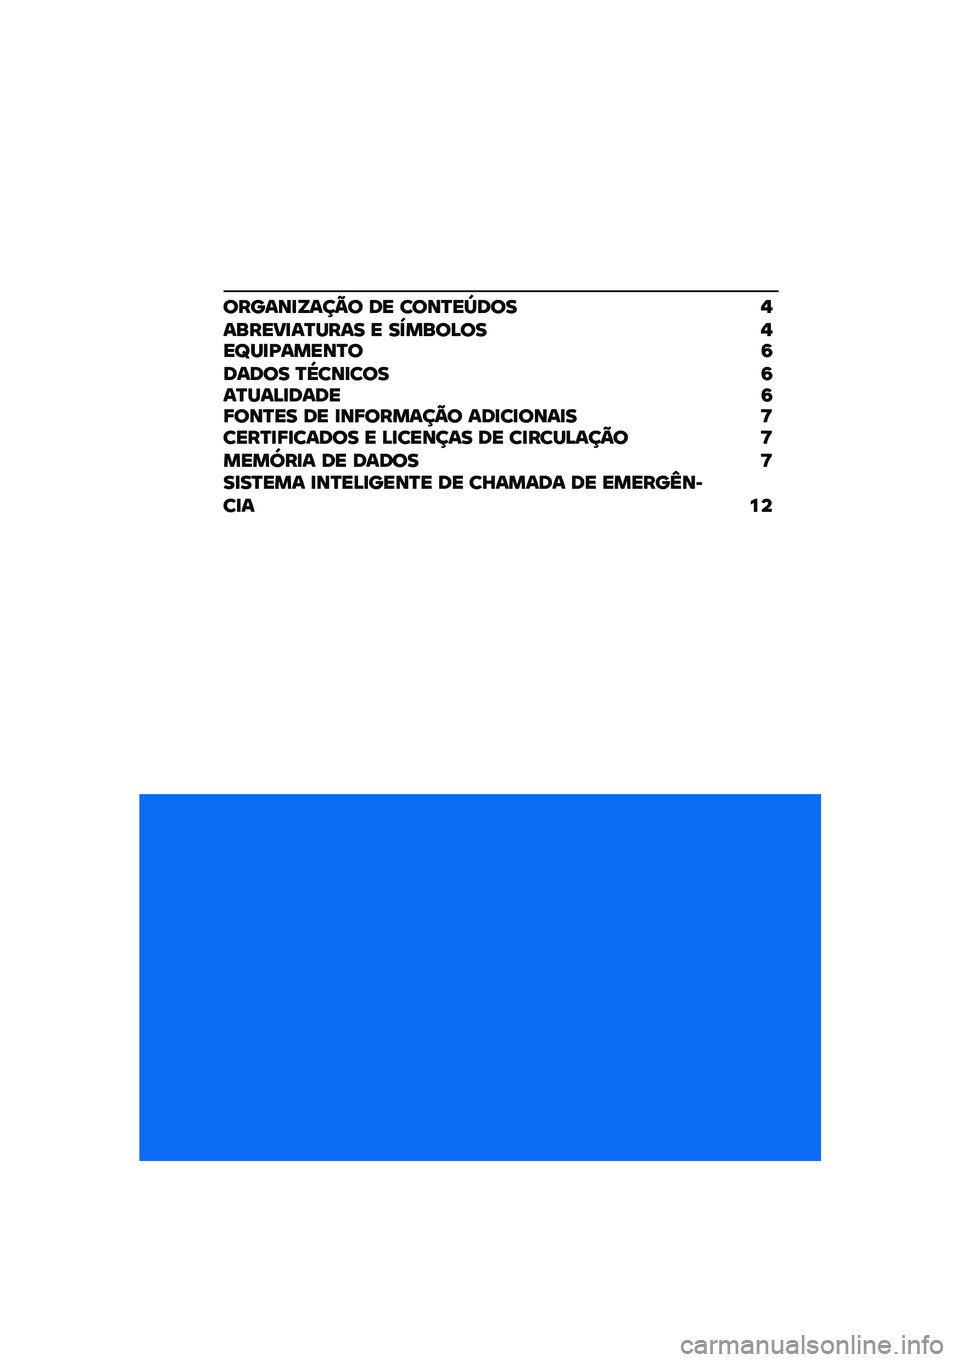 BMW MOTORRAD CE 04 2021  Manual do condutor (in Portuguese) ������
�W���A� �� ����O��e��� �,�����@�
��O���� � ��d����B�� �,��`��
�L�����O��6����� �O�_���
����6��O���B�
�����6�9���O�� �� �
��9���